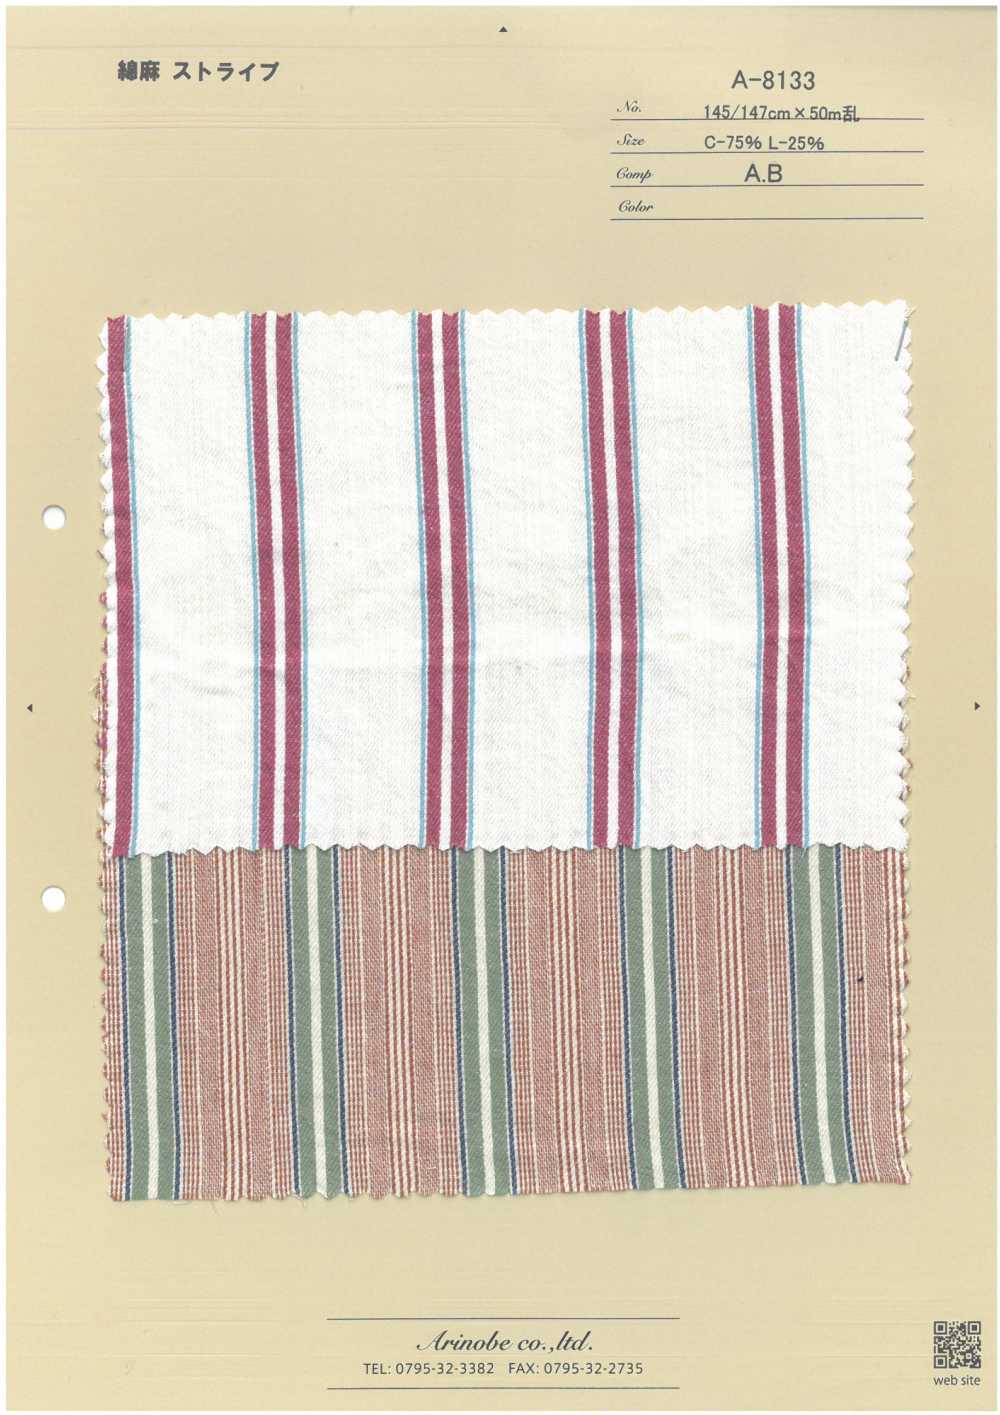 A-8133 Rayas De Lino[Fabrica Textil] ARINOBE CO., LTD.